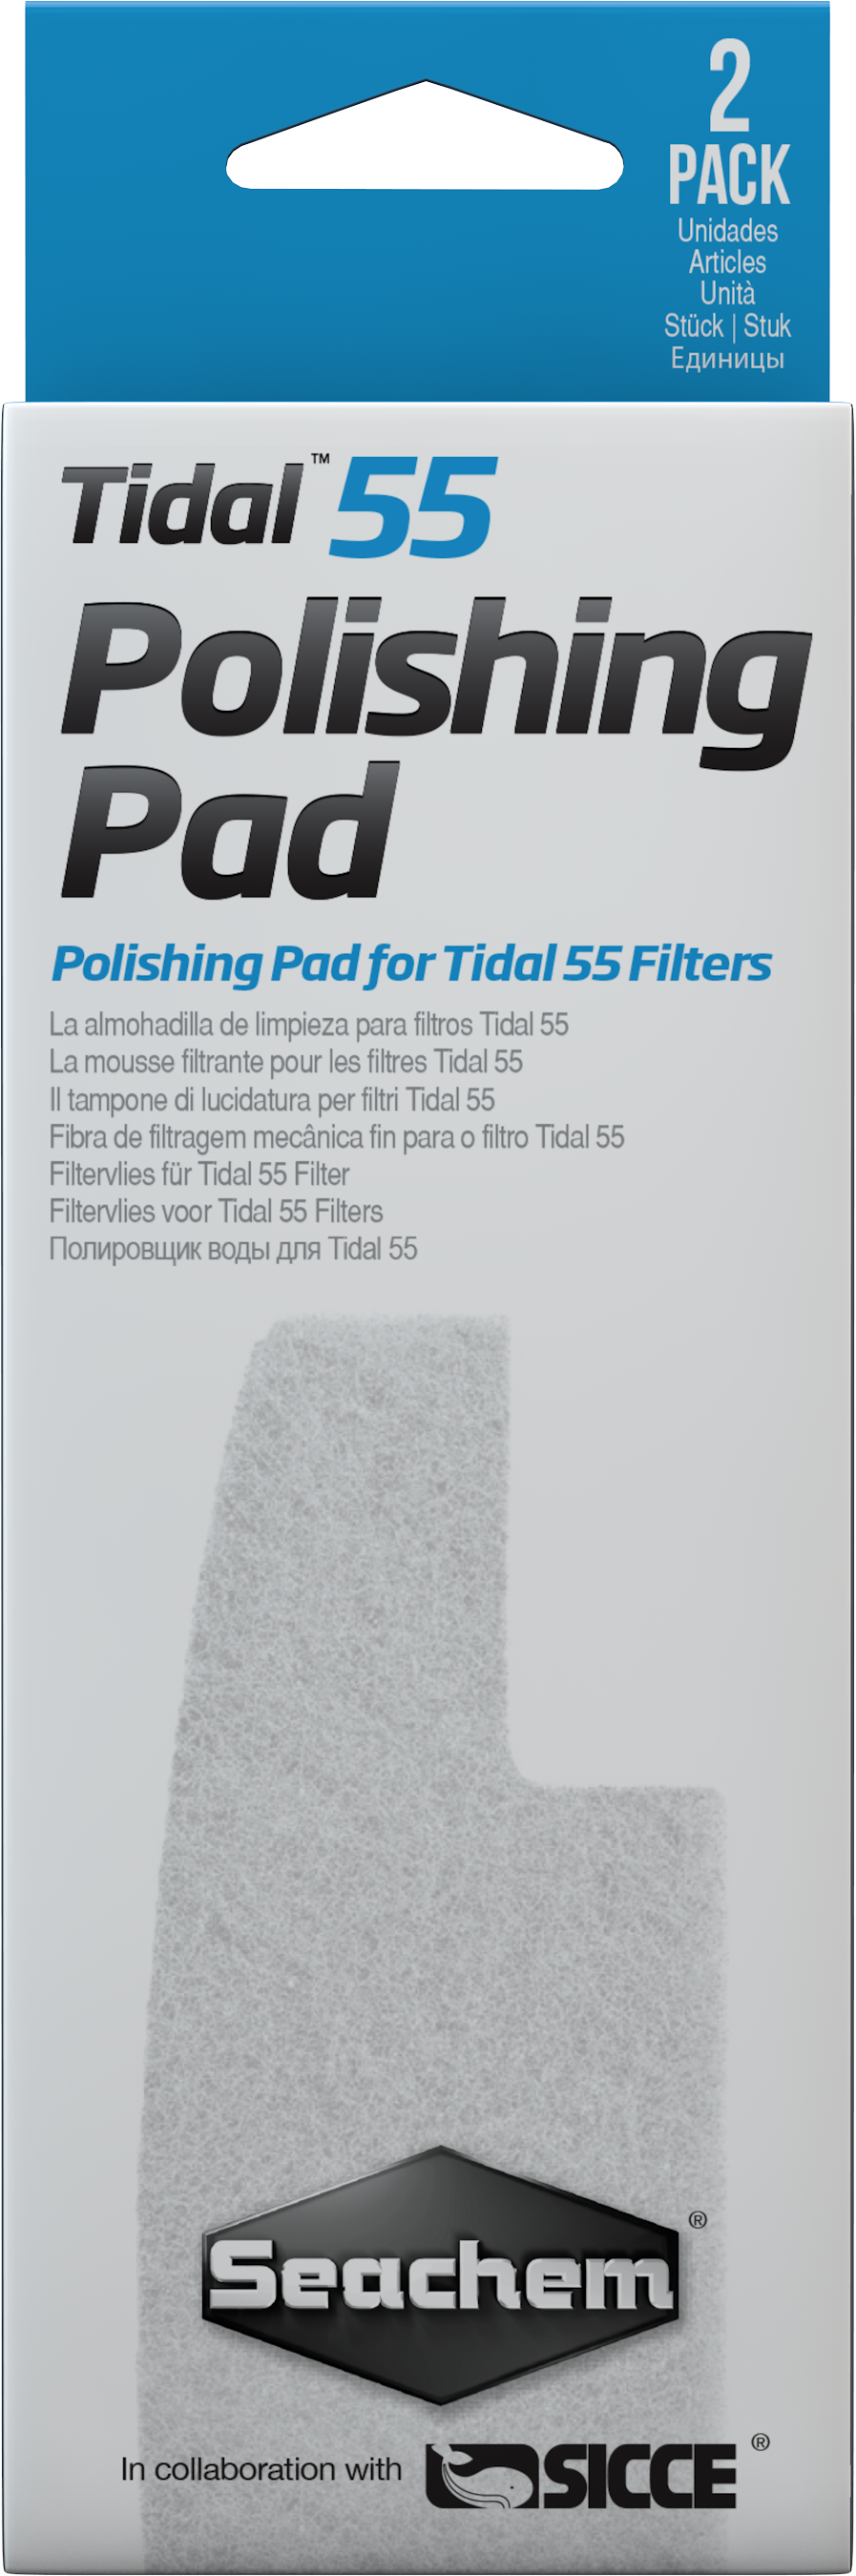 Tidal Polishing Pad (2 Pack)